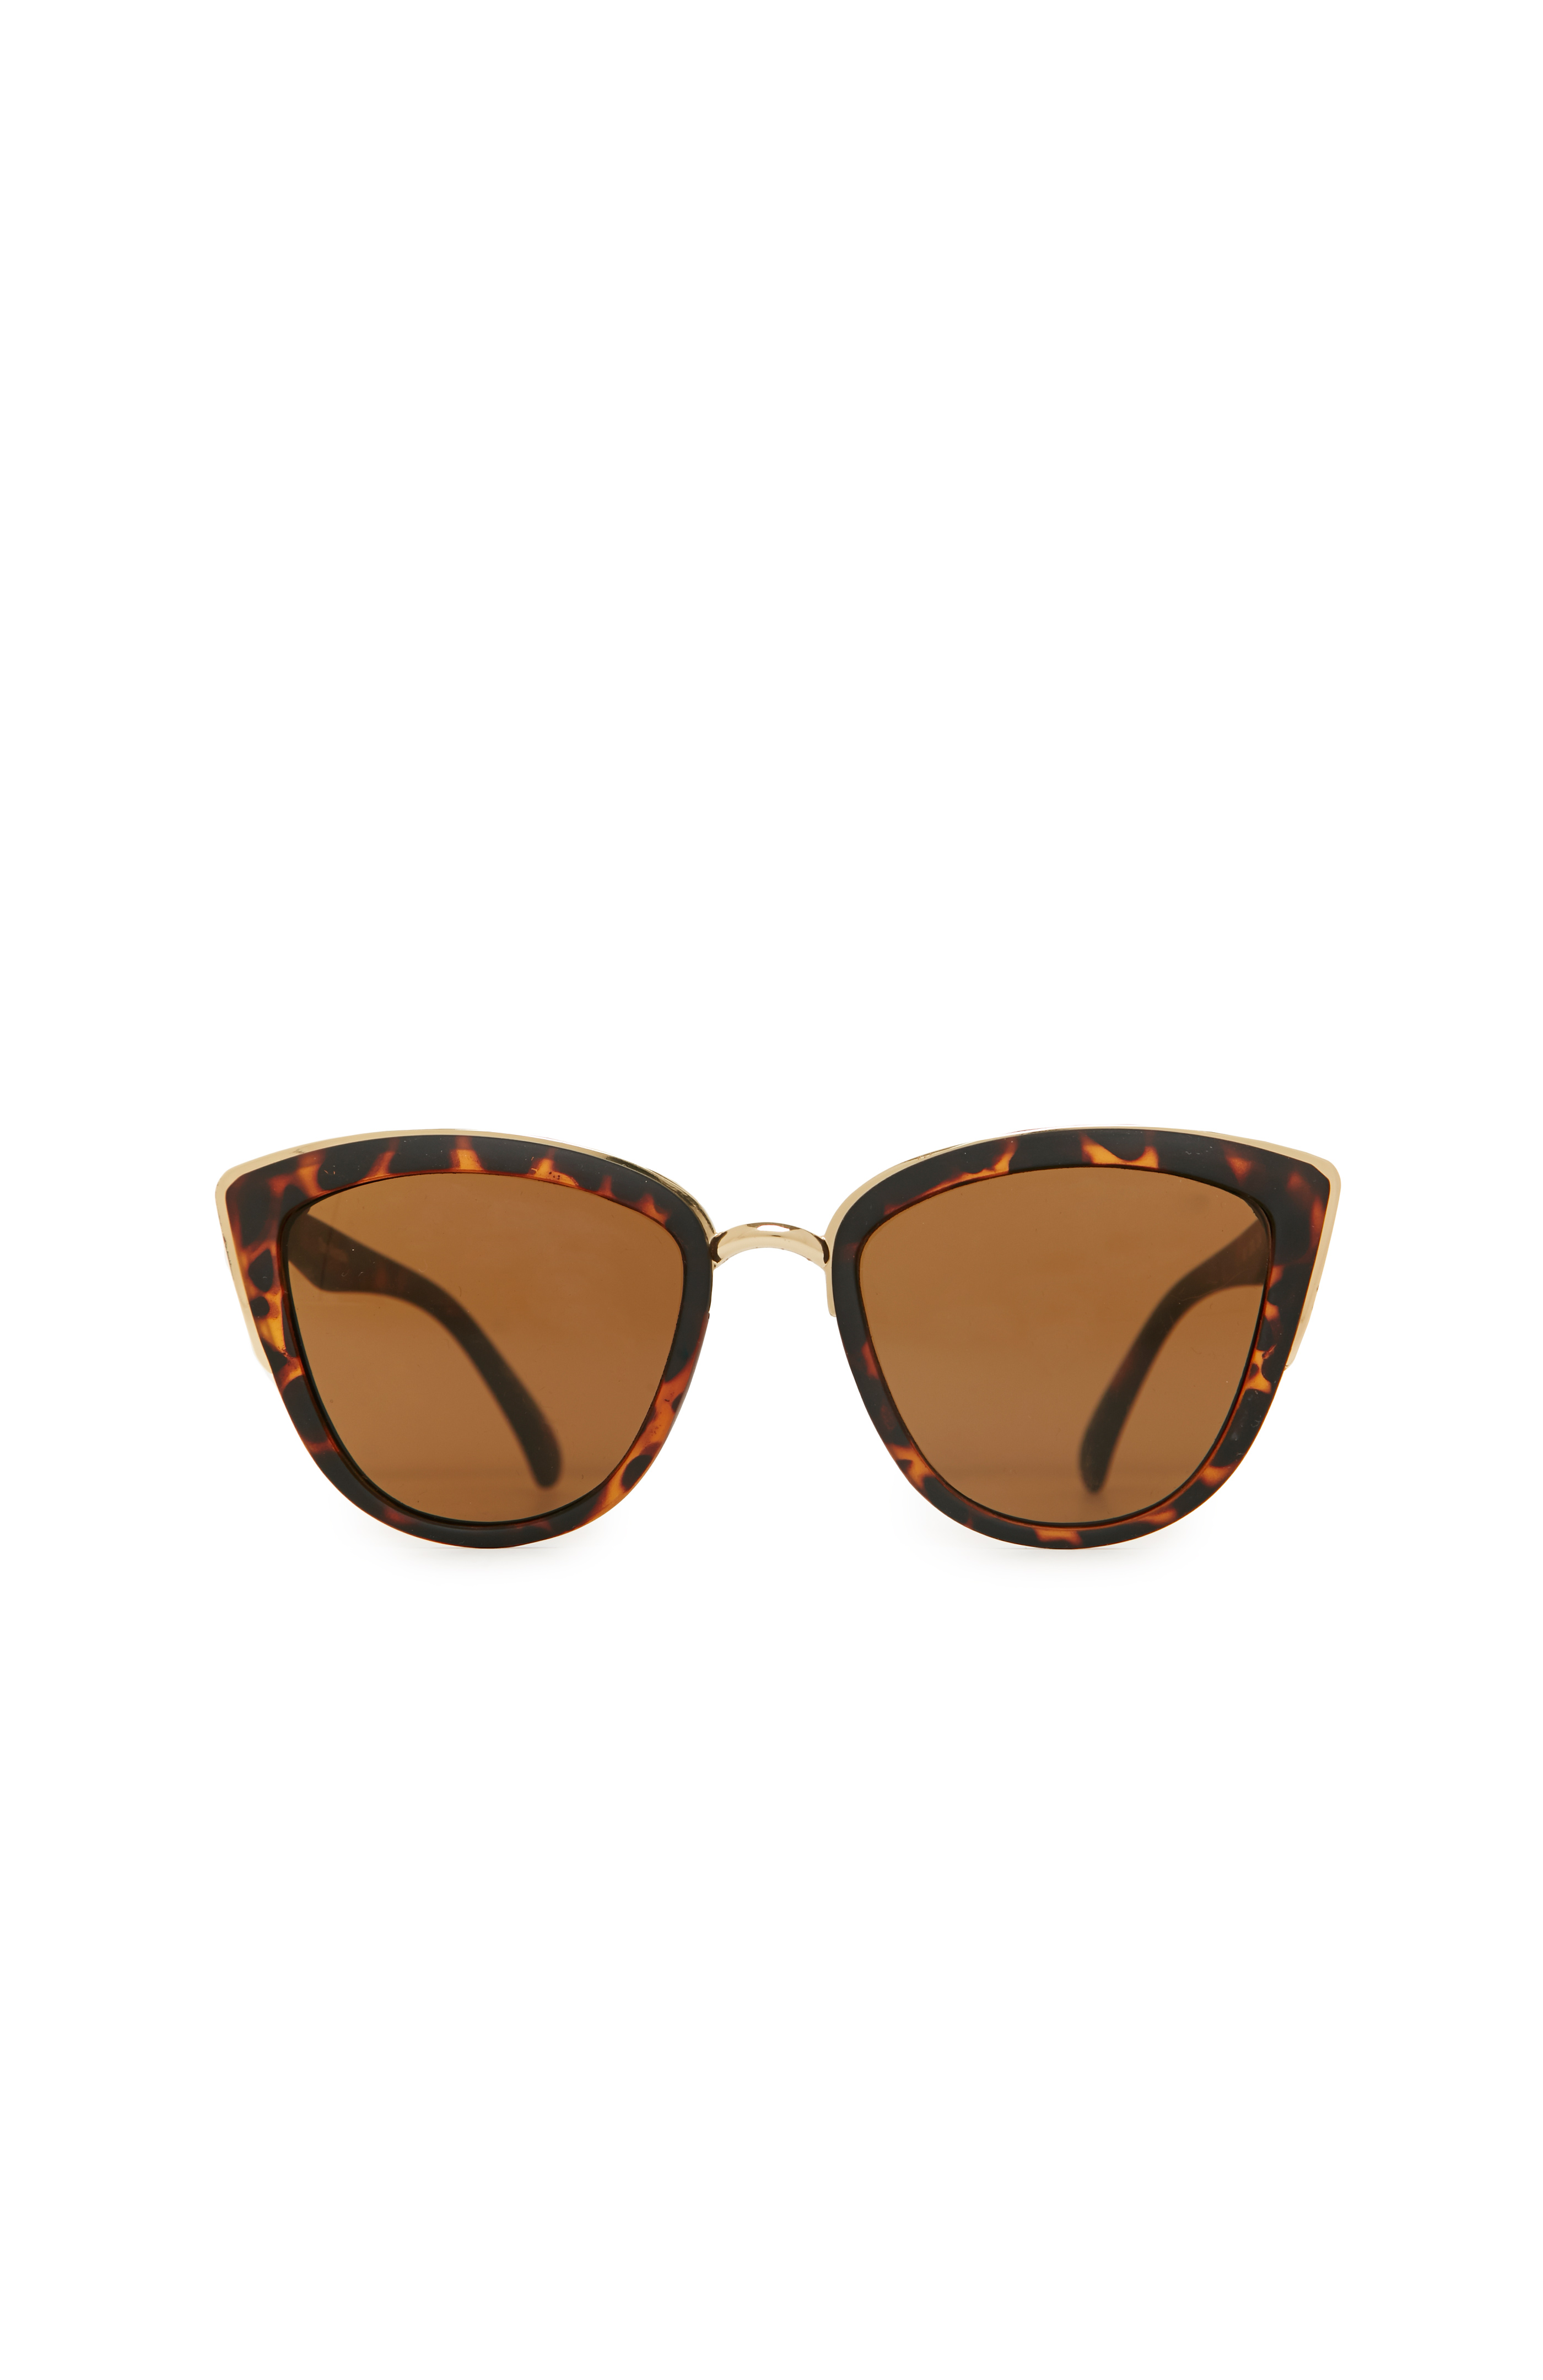 Quay My Girl Winged Sunglasses in Brown Multi | DAILYLOOK